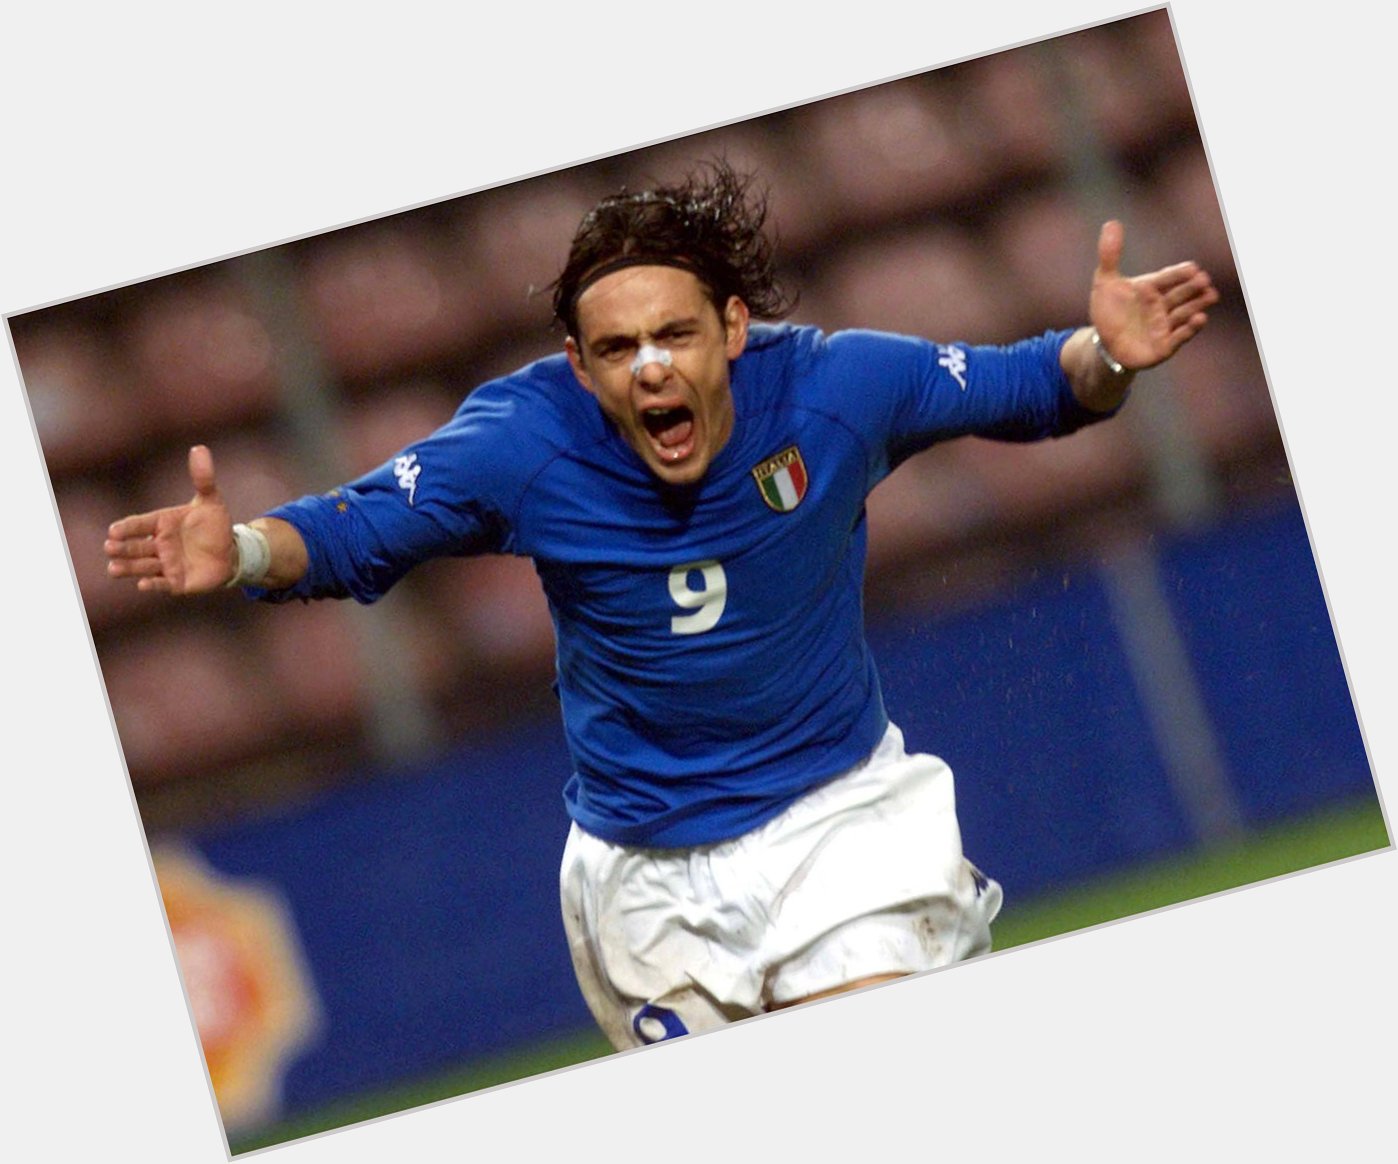  - Serie As: 3

- Champions Leagues: 2

- Coppa Italias: 1

Happy birthday Filippo Inzaghi... 